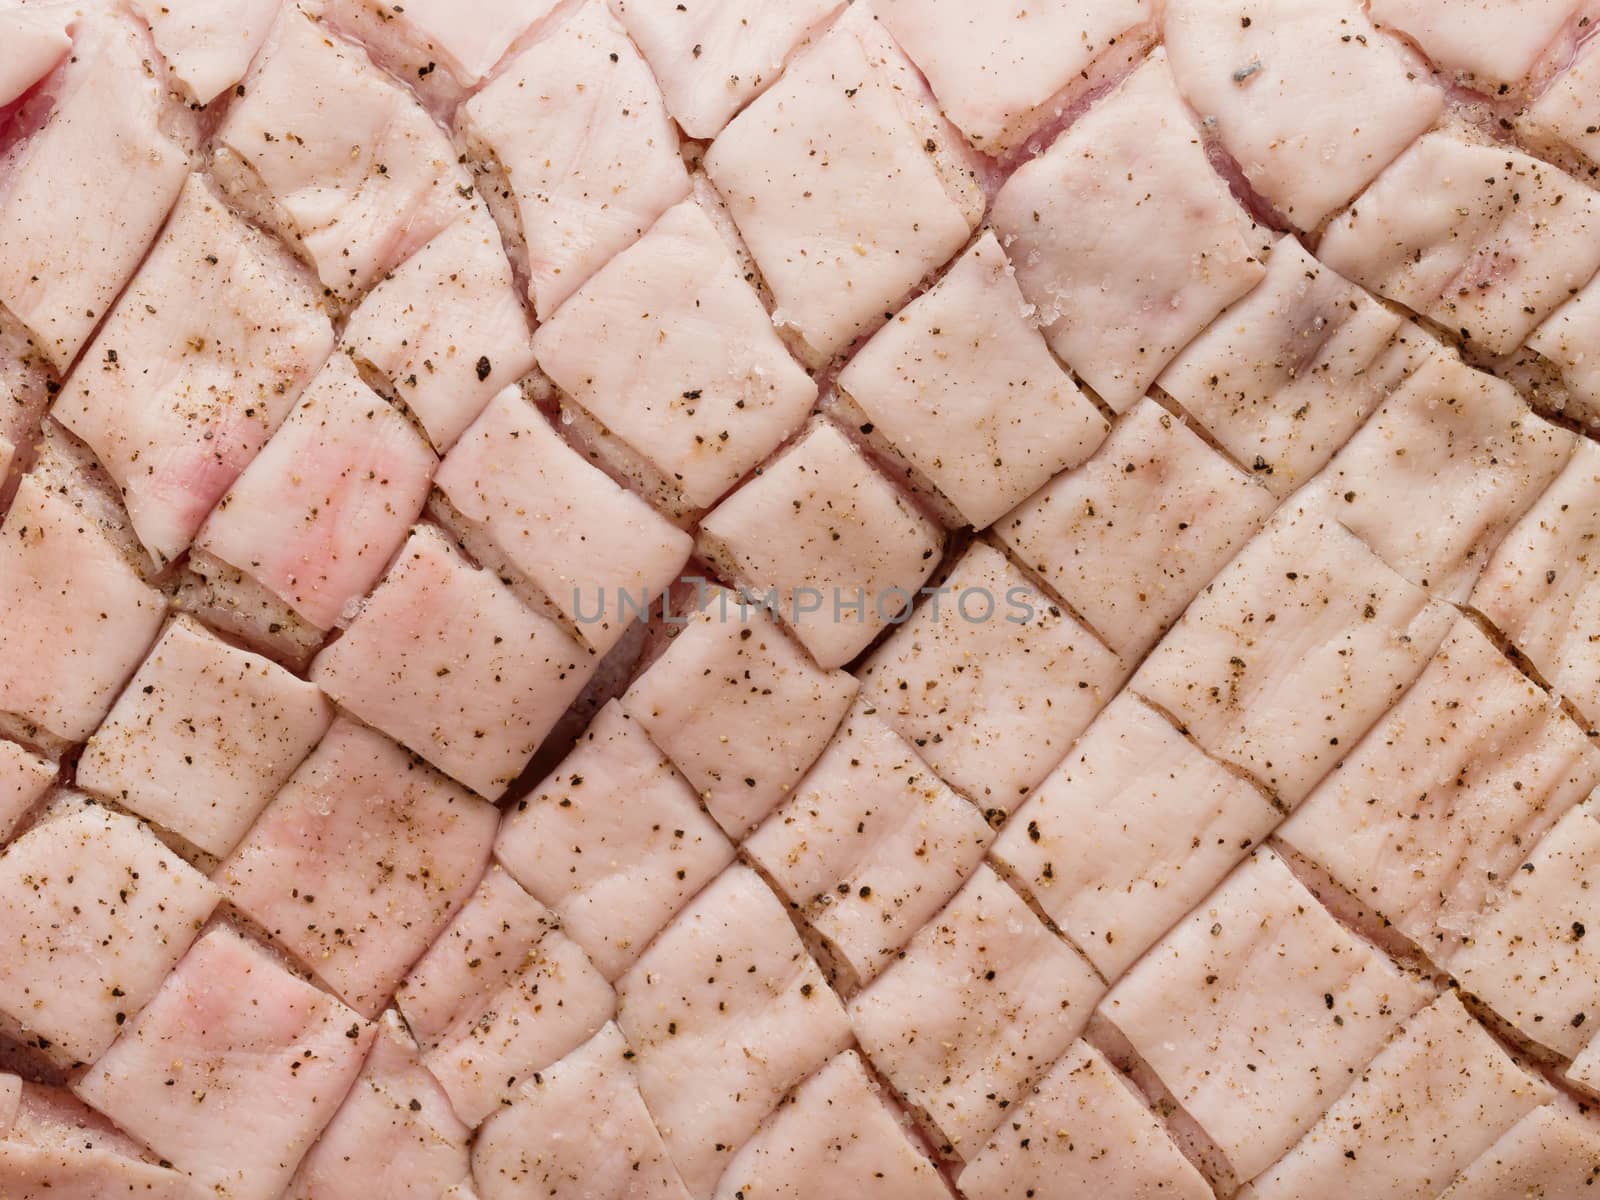 raw uncooked seasoned scored pork belly skin background by zkruger